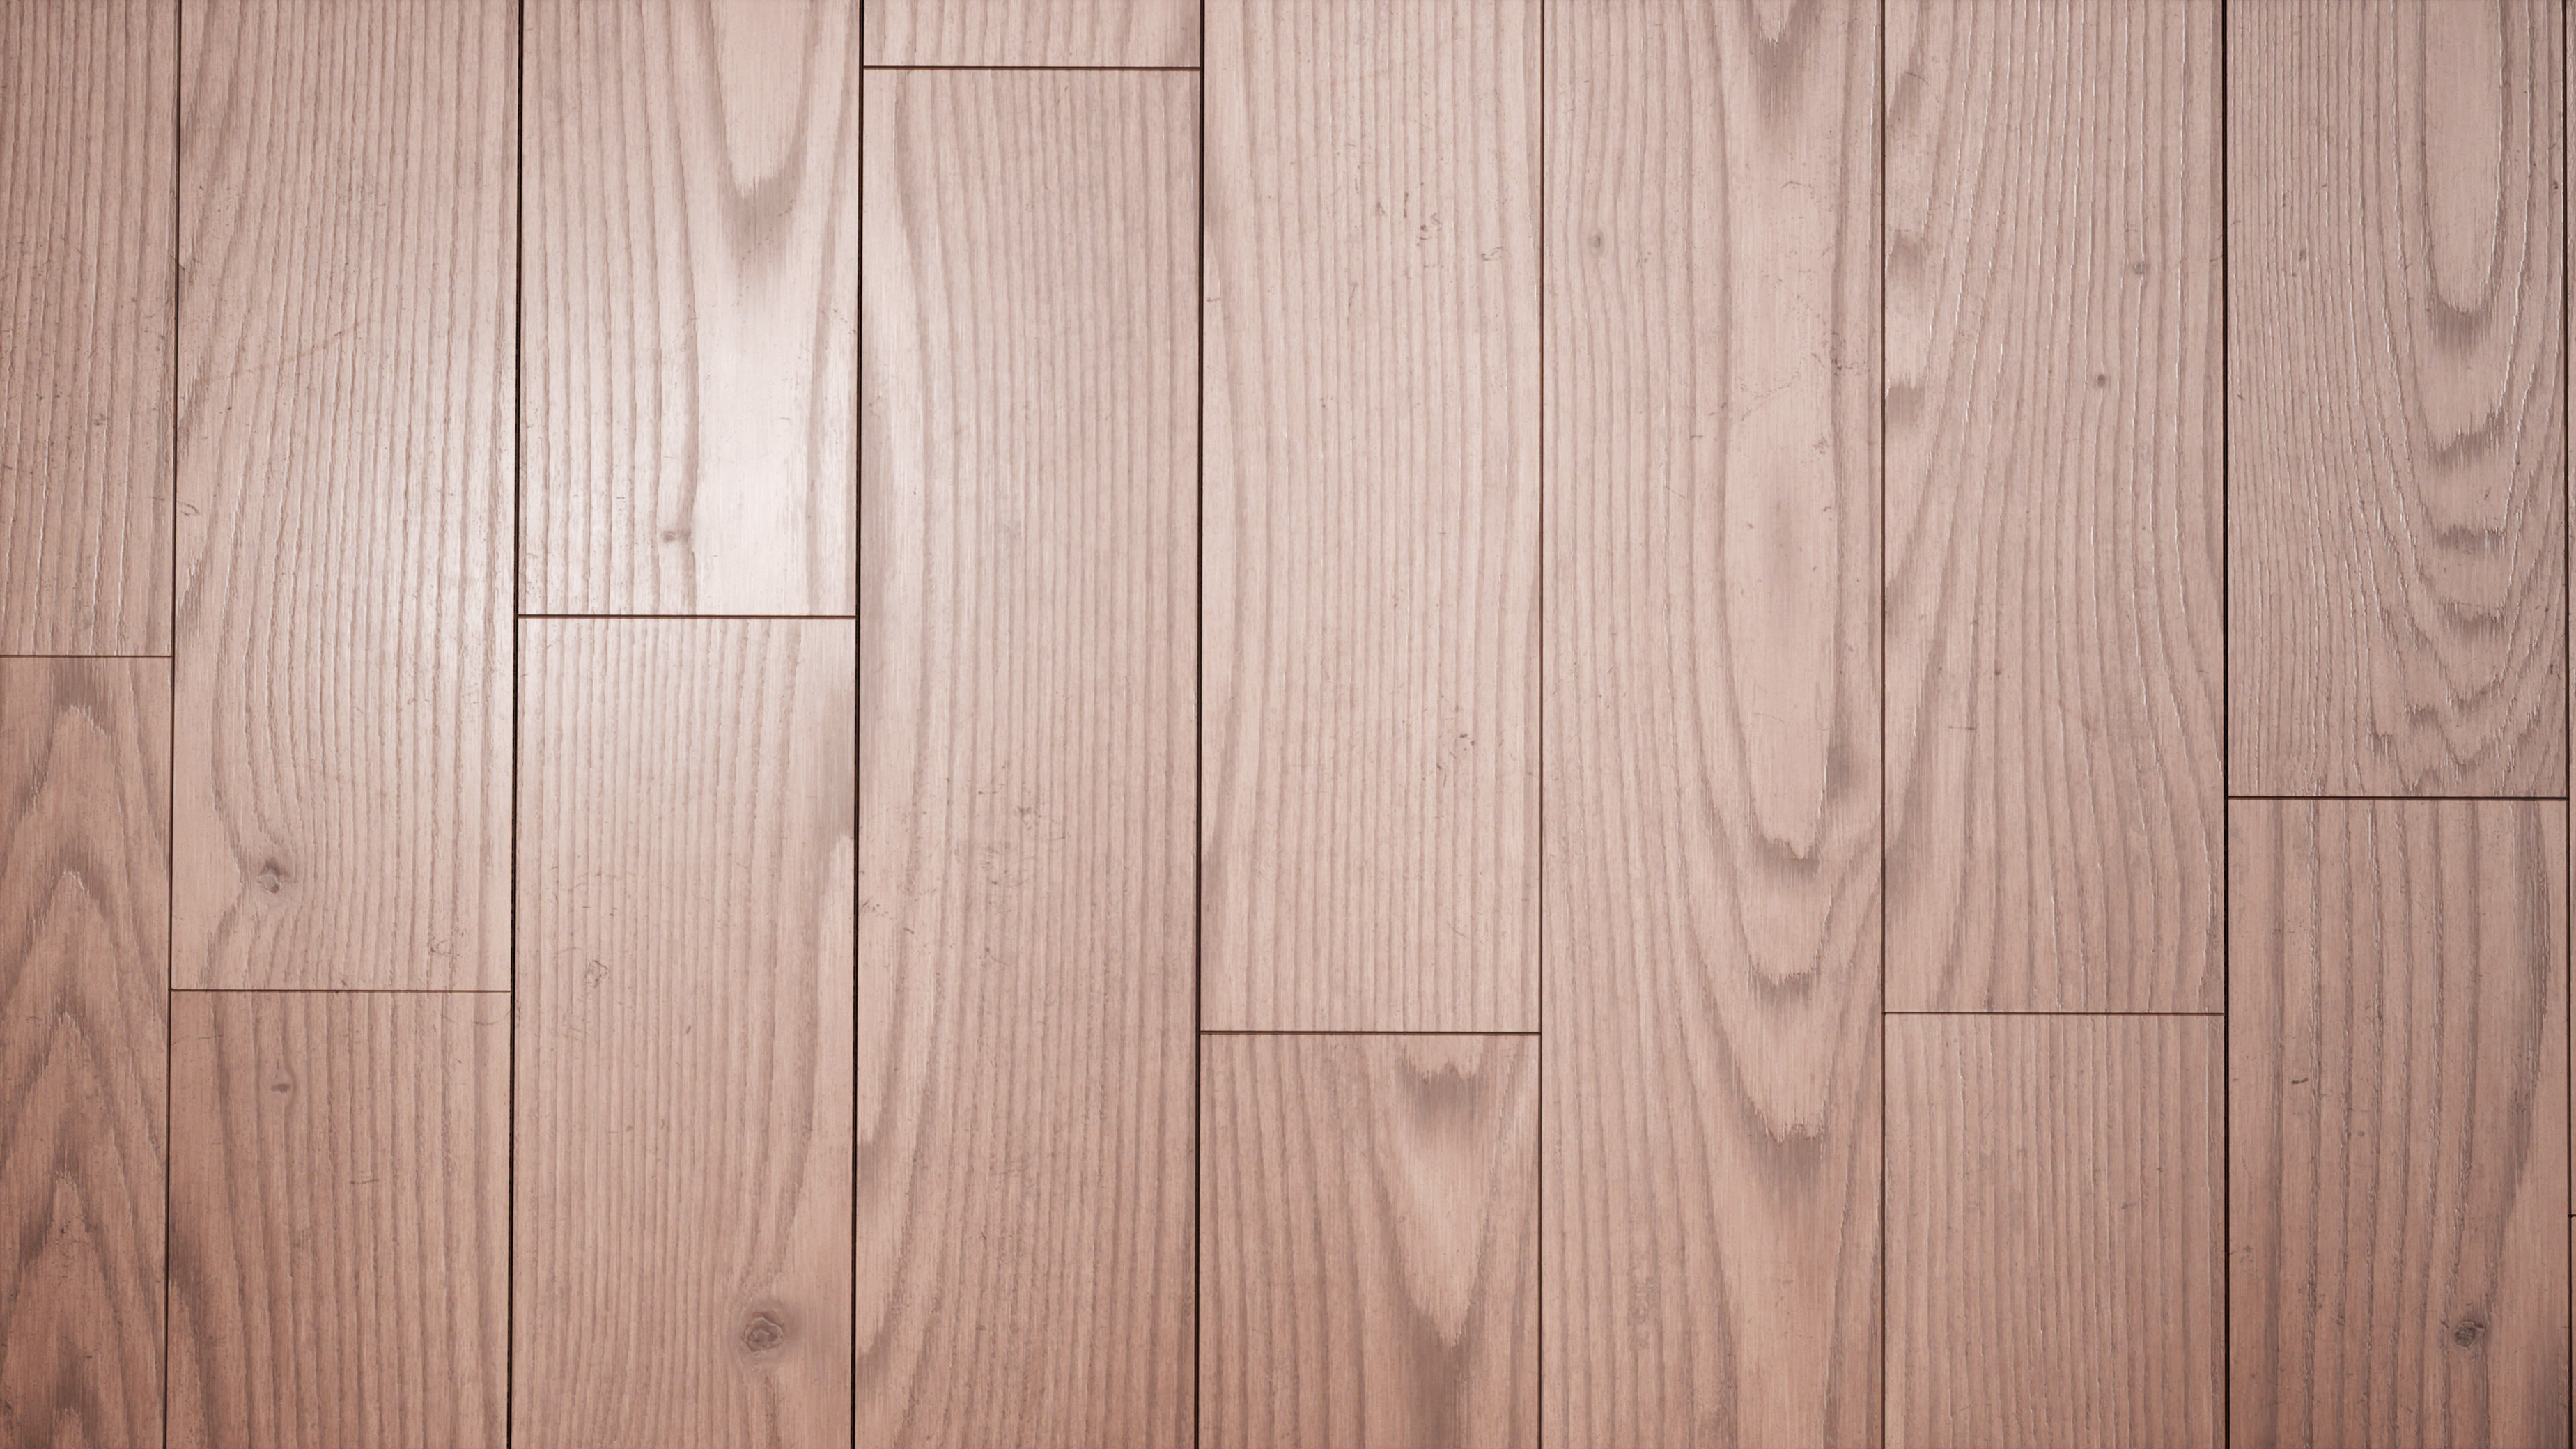 ArtStation - Oak Wood Flooring Material 3700x2080